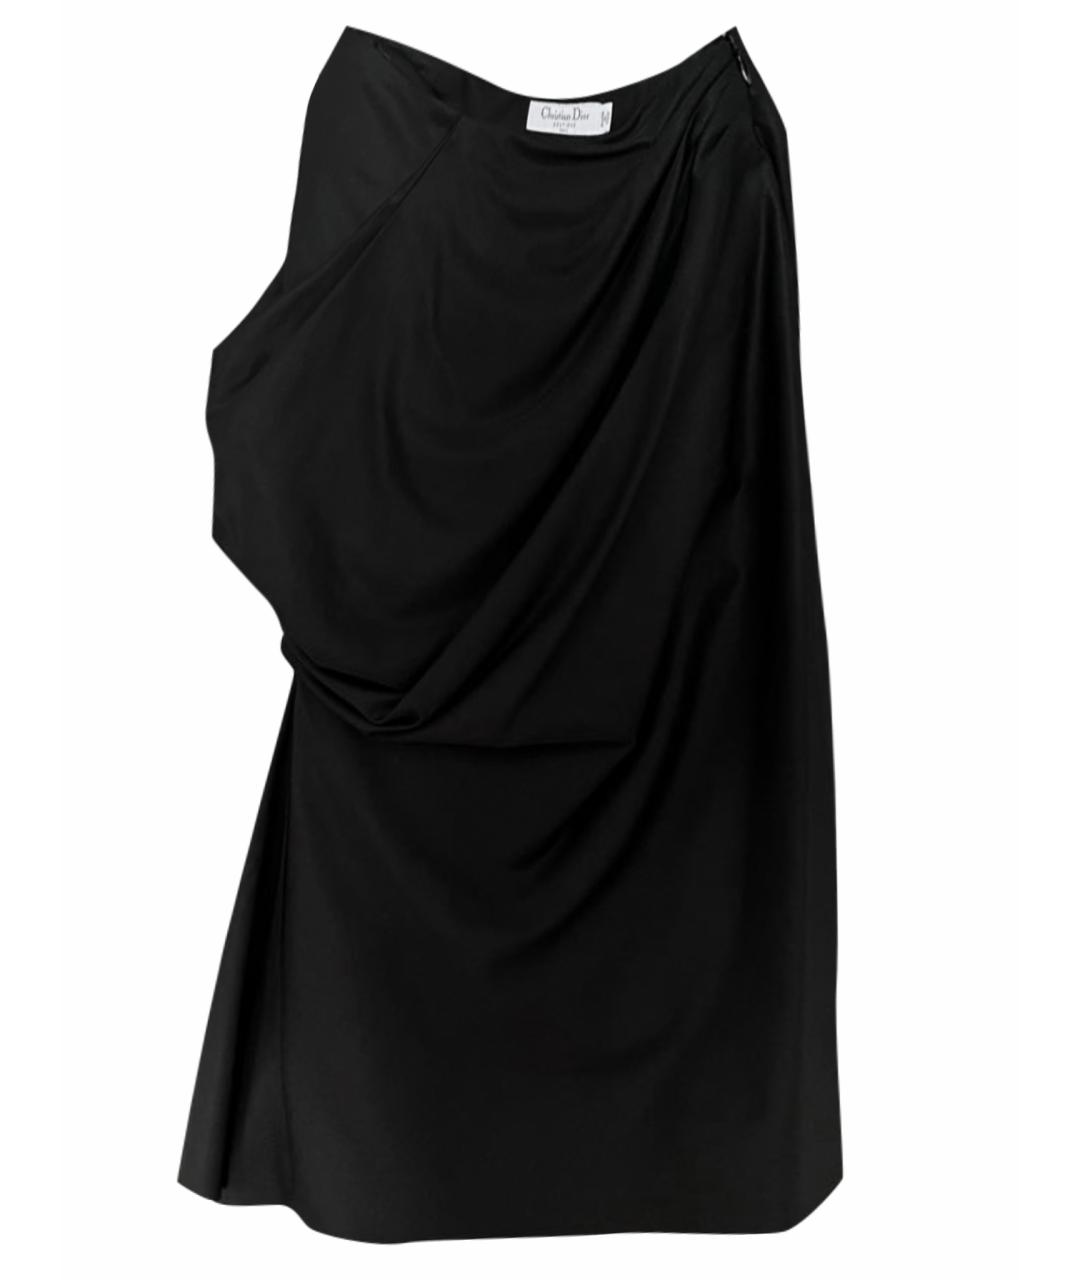 CHRISTIAN DIOR PRE-OWNED Черная шерстяная юбка миди, фото 1